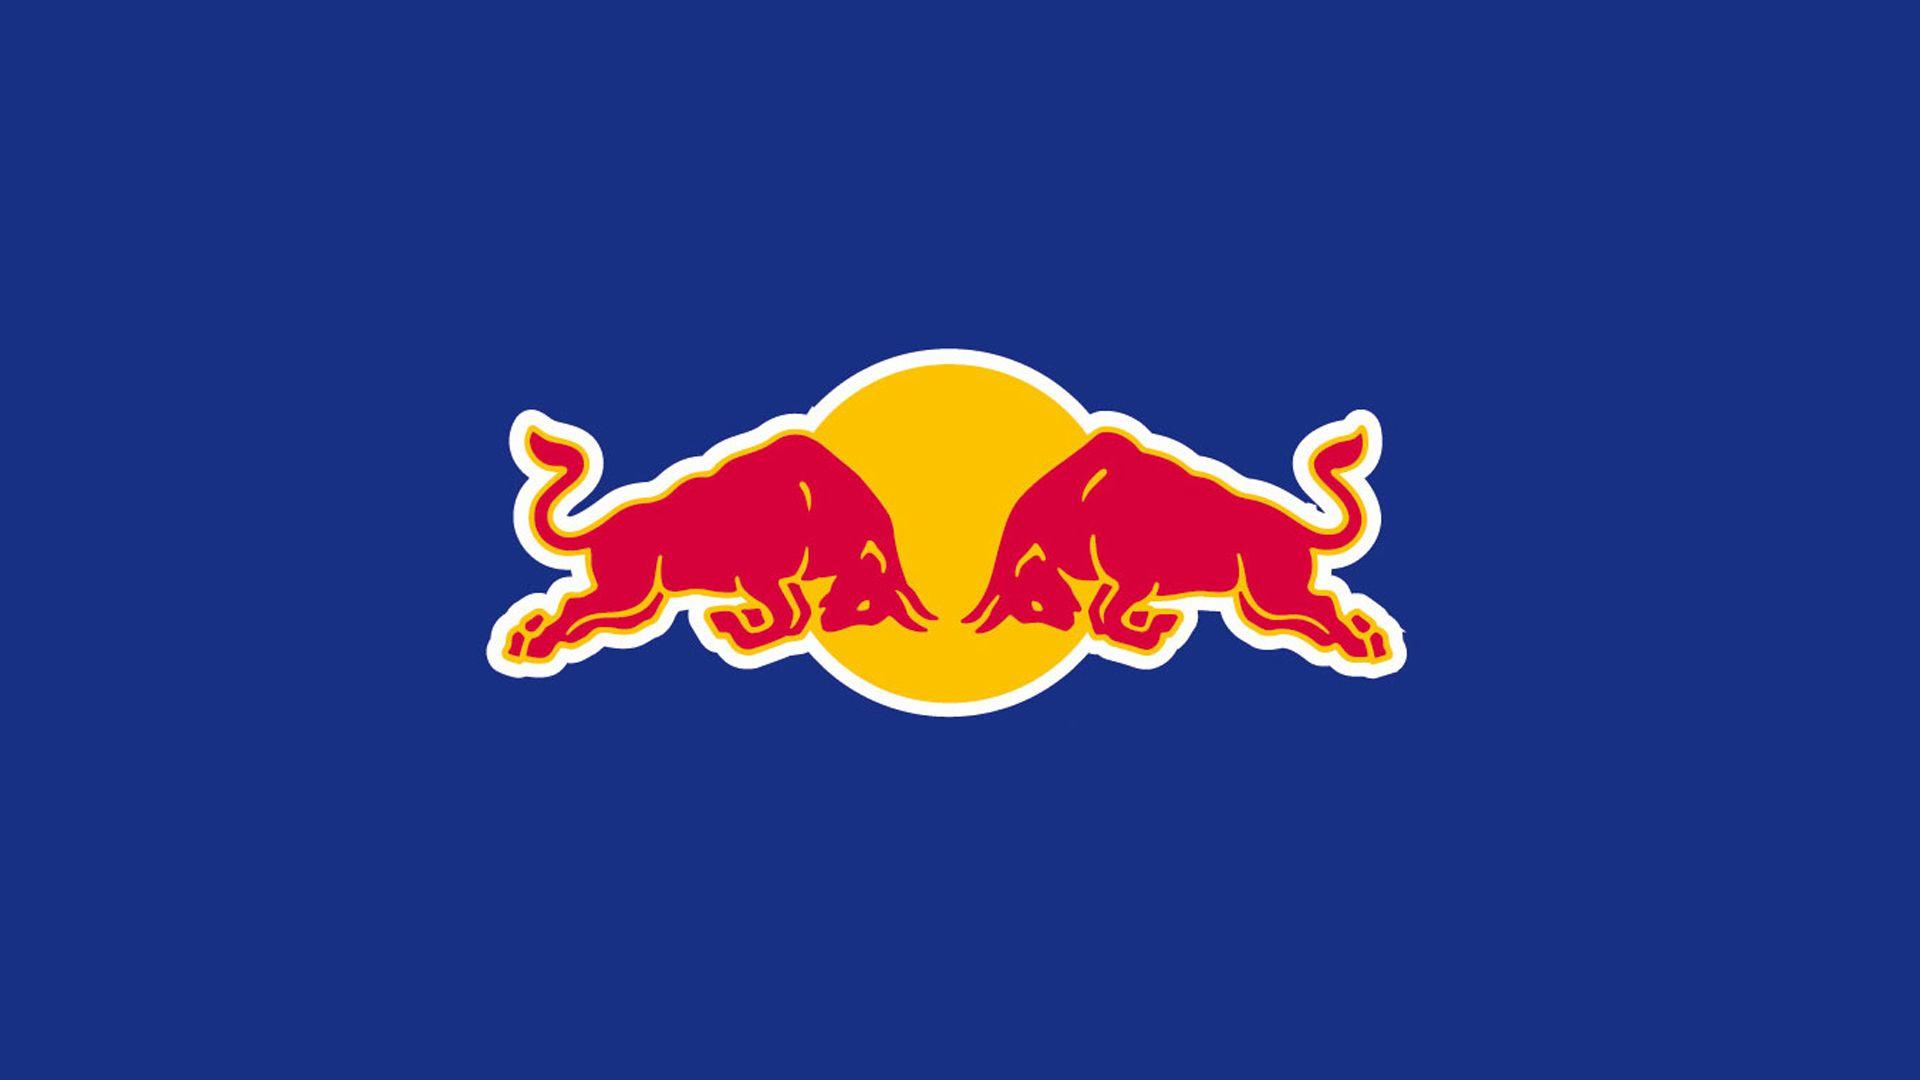 Wallpaper.wiki Red Bull Logo Desktop Wallpaper PIC WPD005155